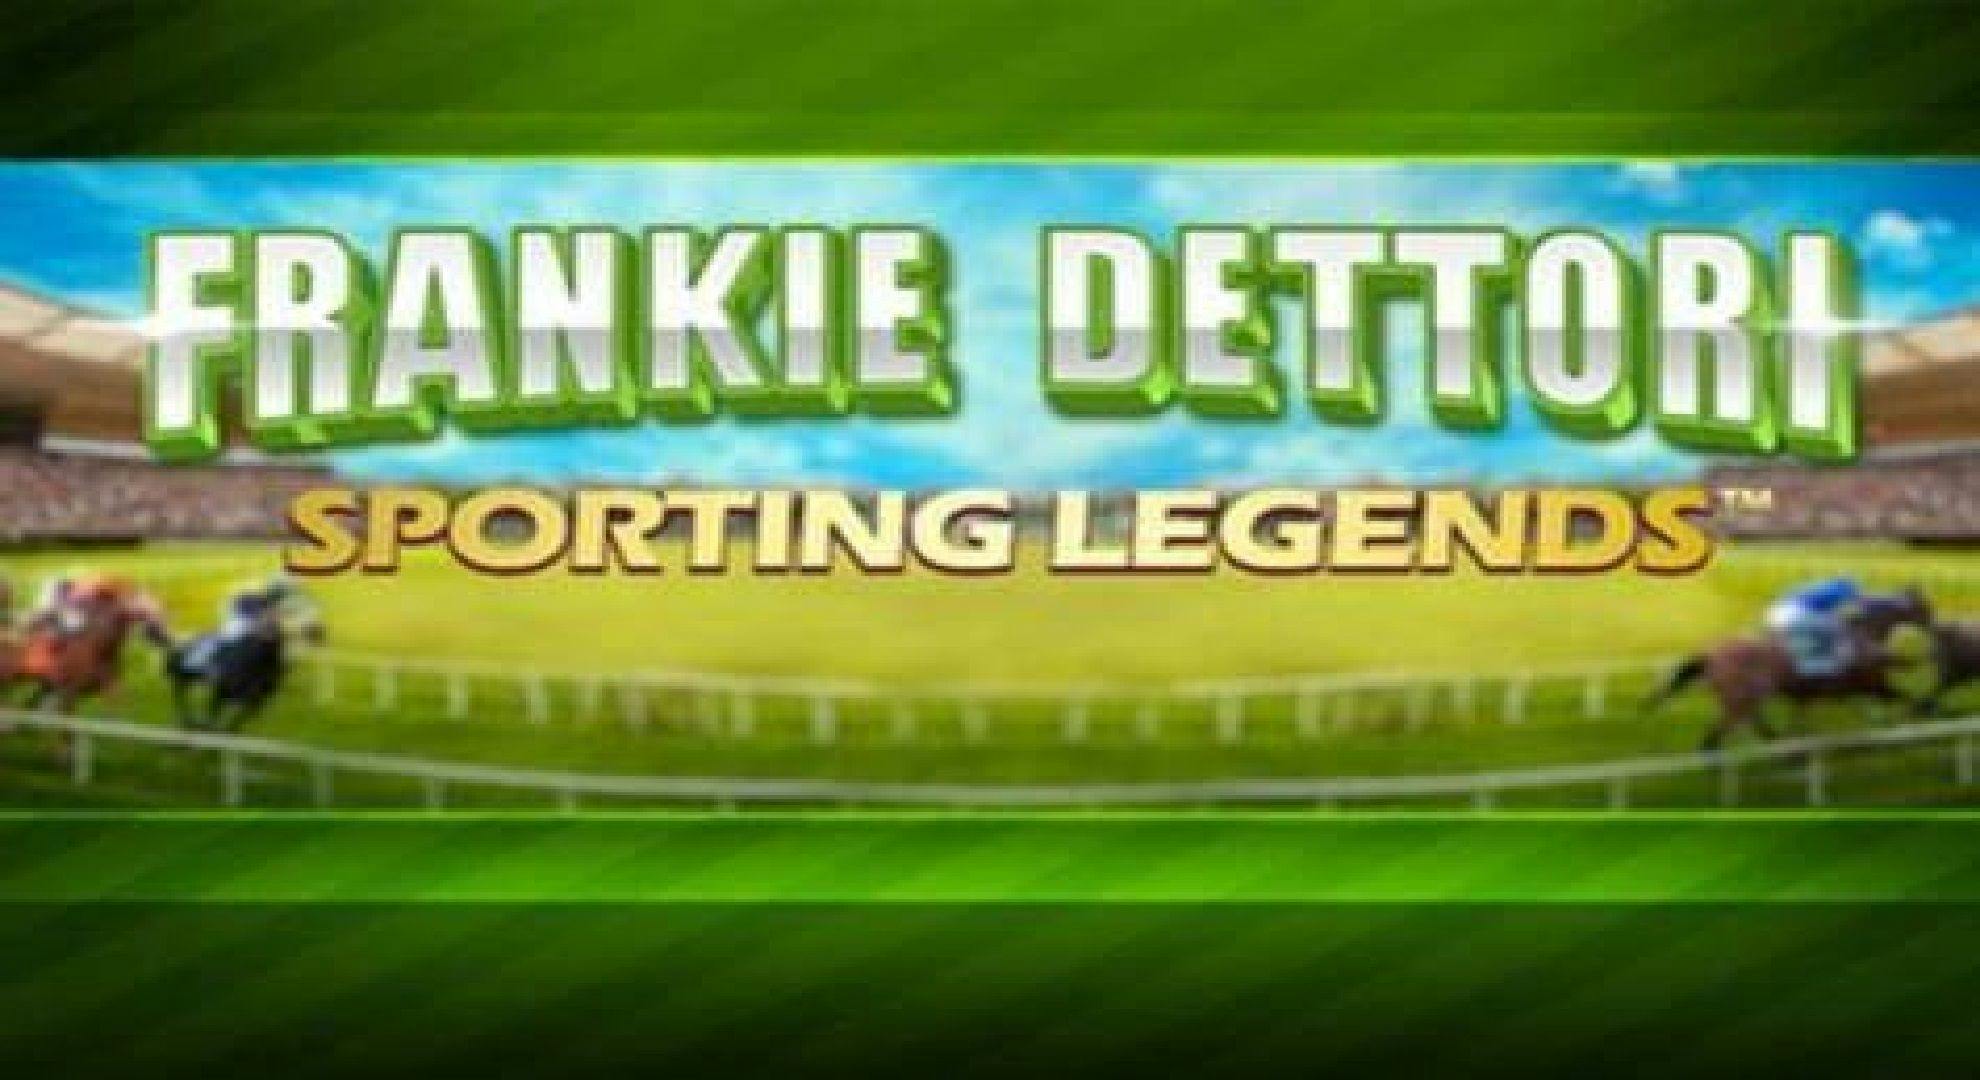 Frankie Dettori's Sporting Legends Slot Online Free Play